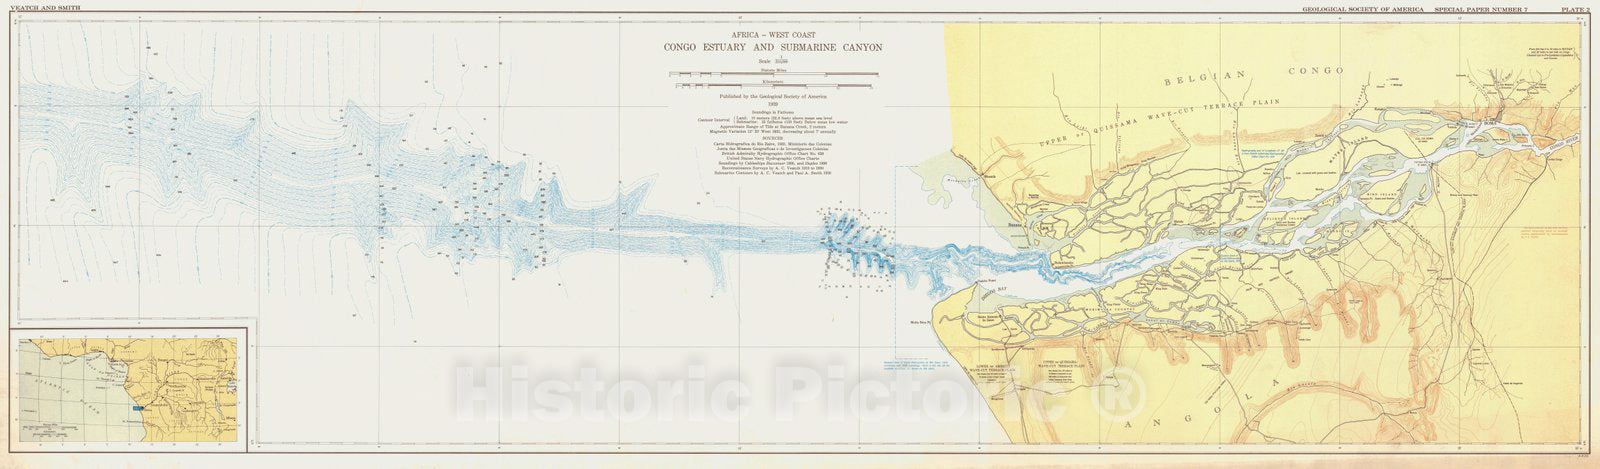 Historic Nautical Map - Africa - West Coast Congo Estuary And Submarine Canyon, OTHER, 1939 NOAA Cartographic - Vintage Wall Art